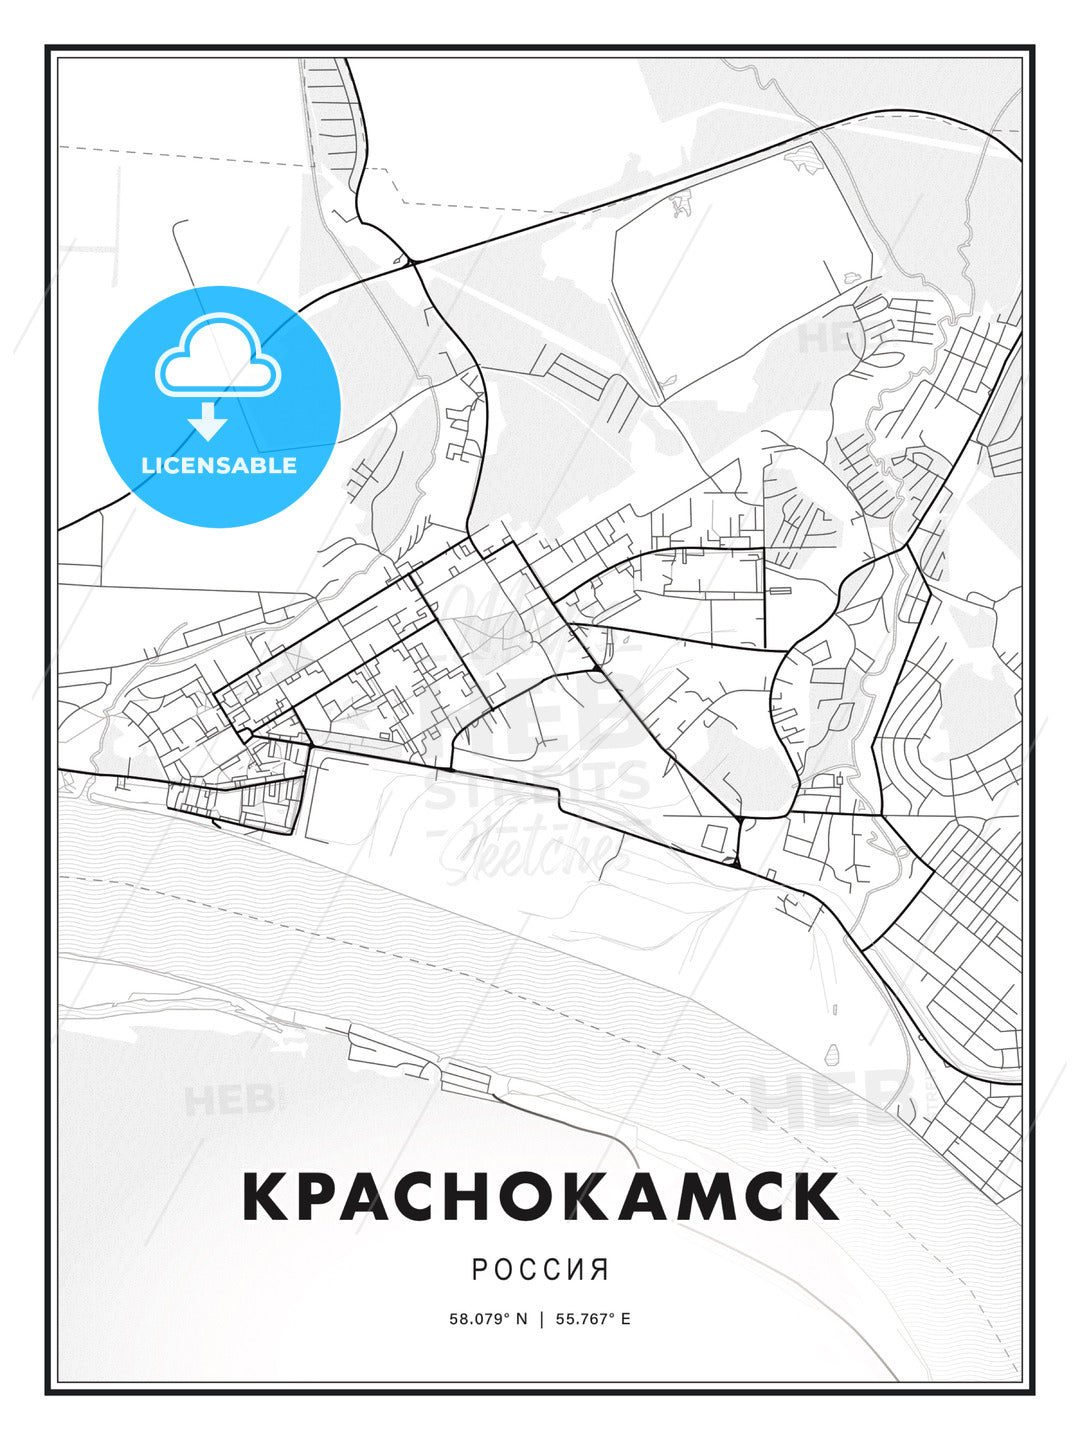 КРАСНОКАМСК / Krasnokamsk, Russia, Modern Print Template in Various Formats - HEBSTREITS Sketches